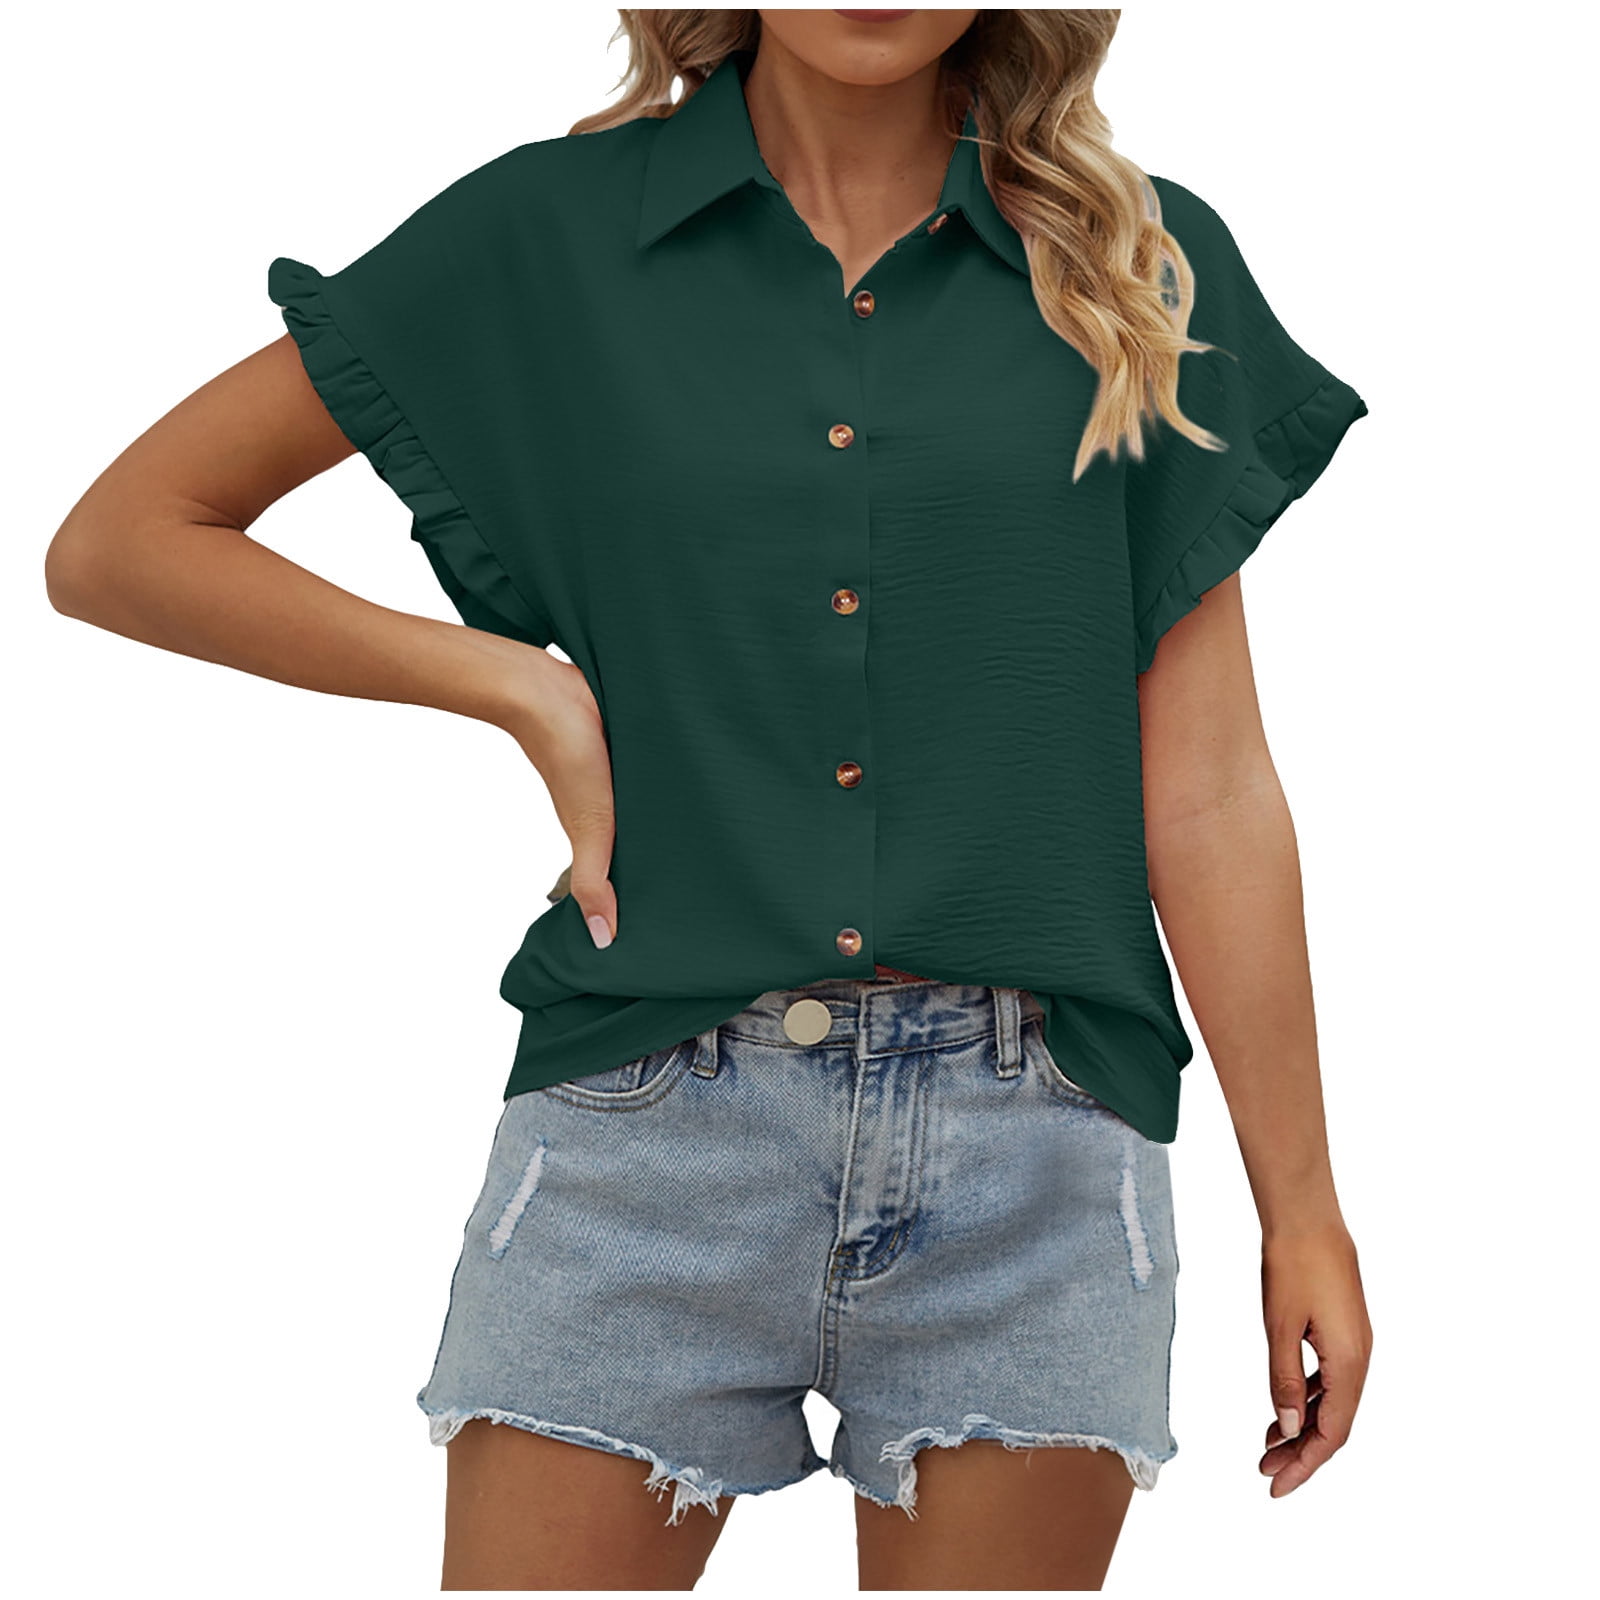 RYRJJ Womens Summer Casual T-Shirts V Neck Ruffle Short Sleeve